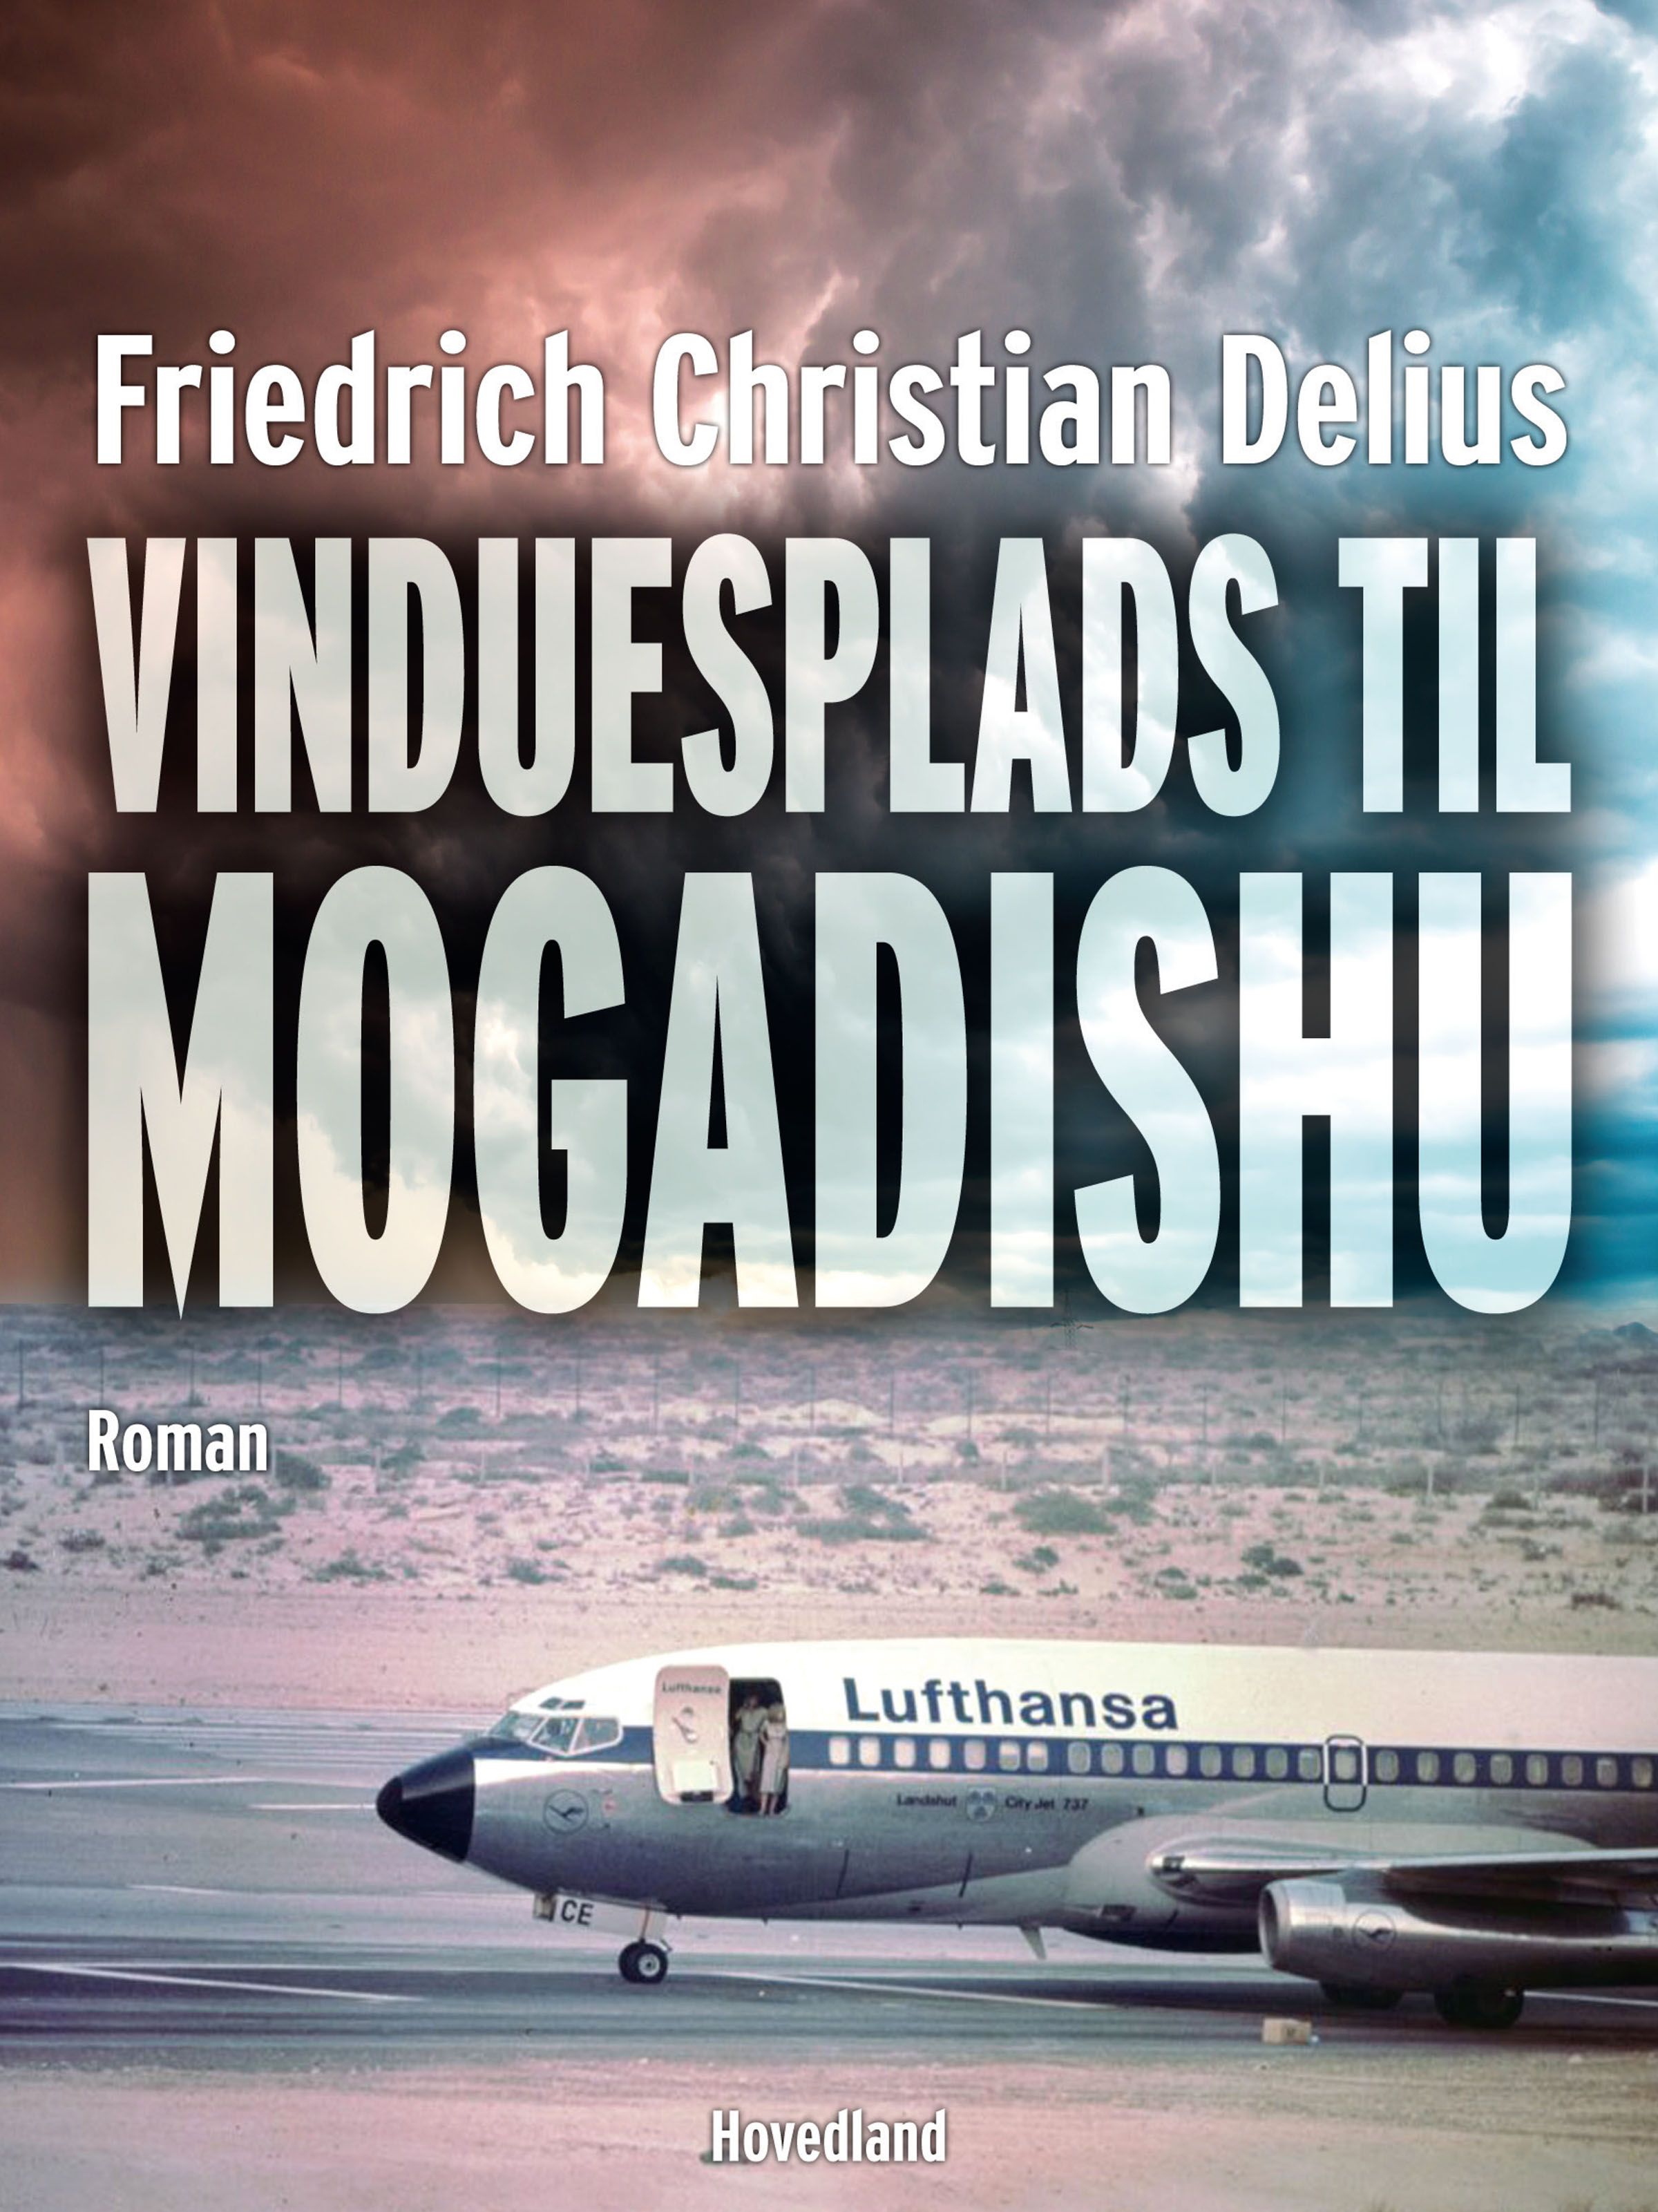 Vinduesplads Mogadishu, eBook by Friedrich Christian Delius